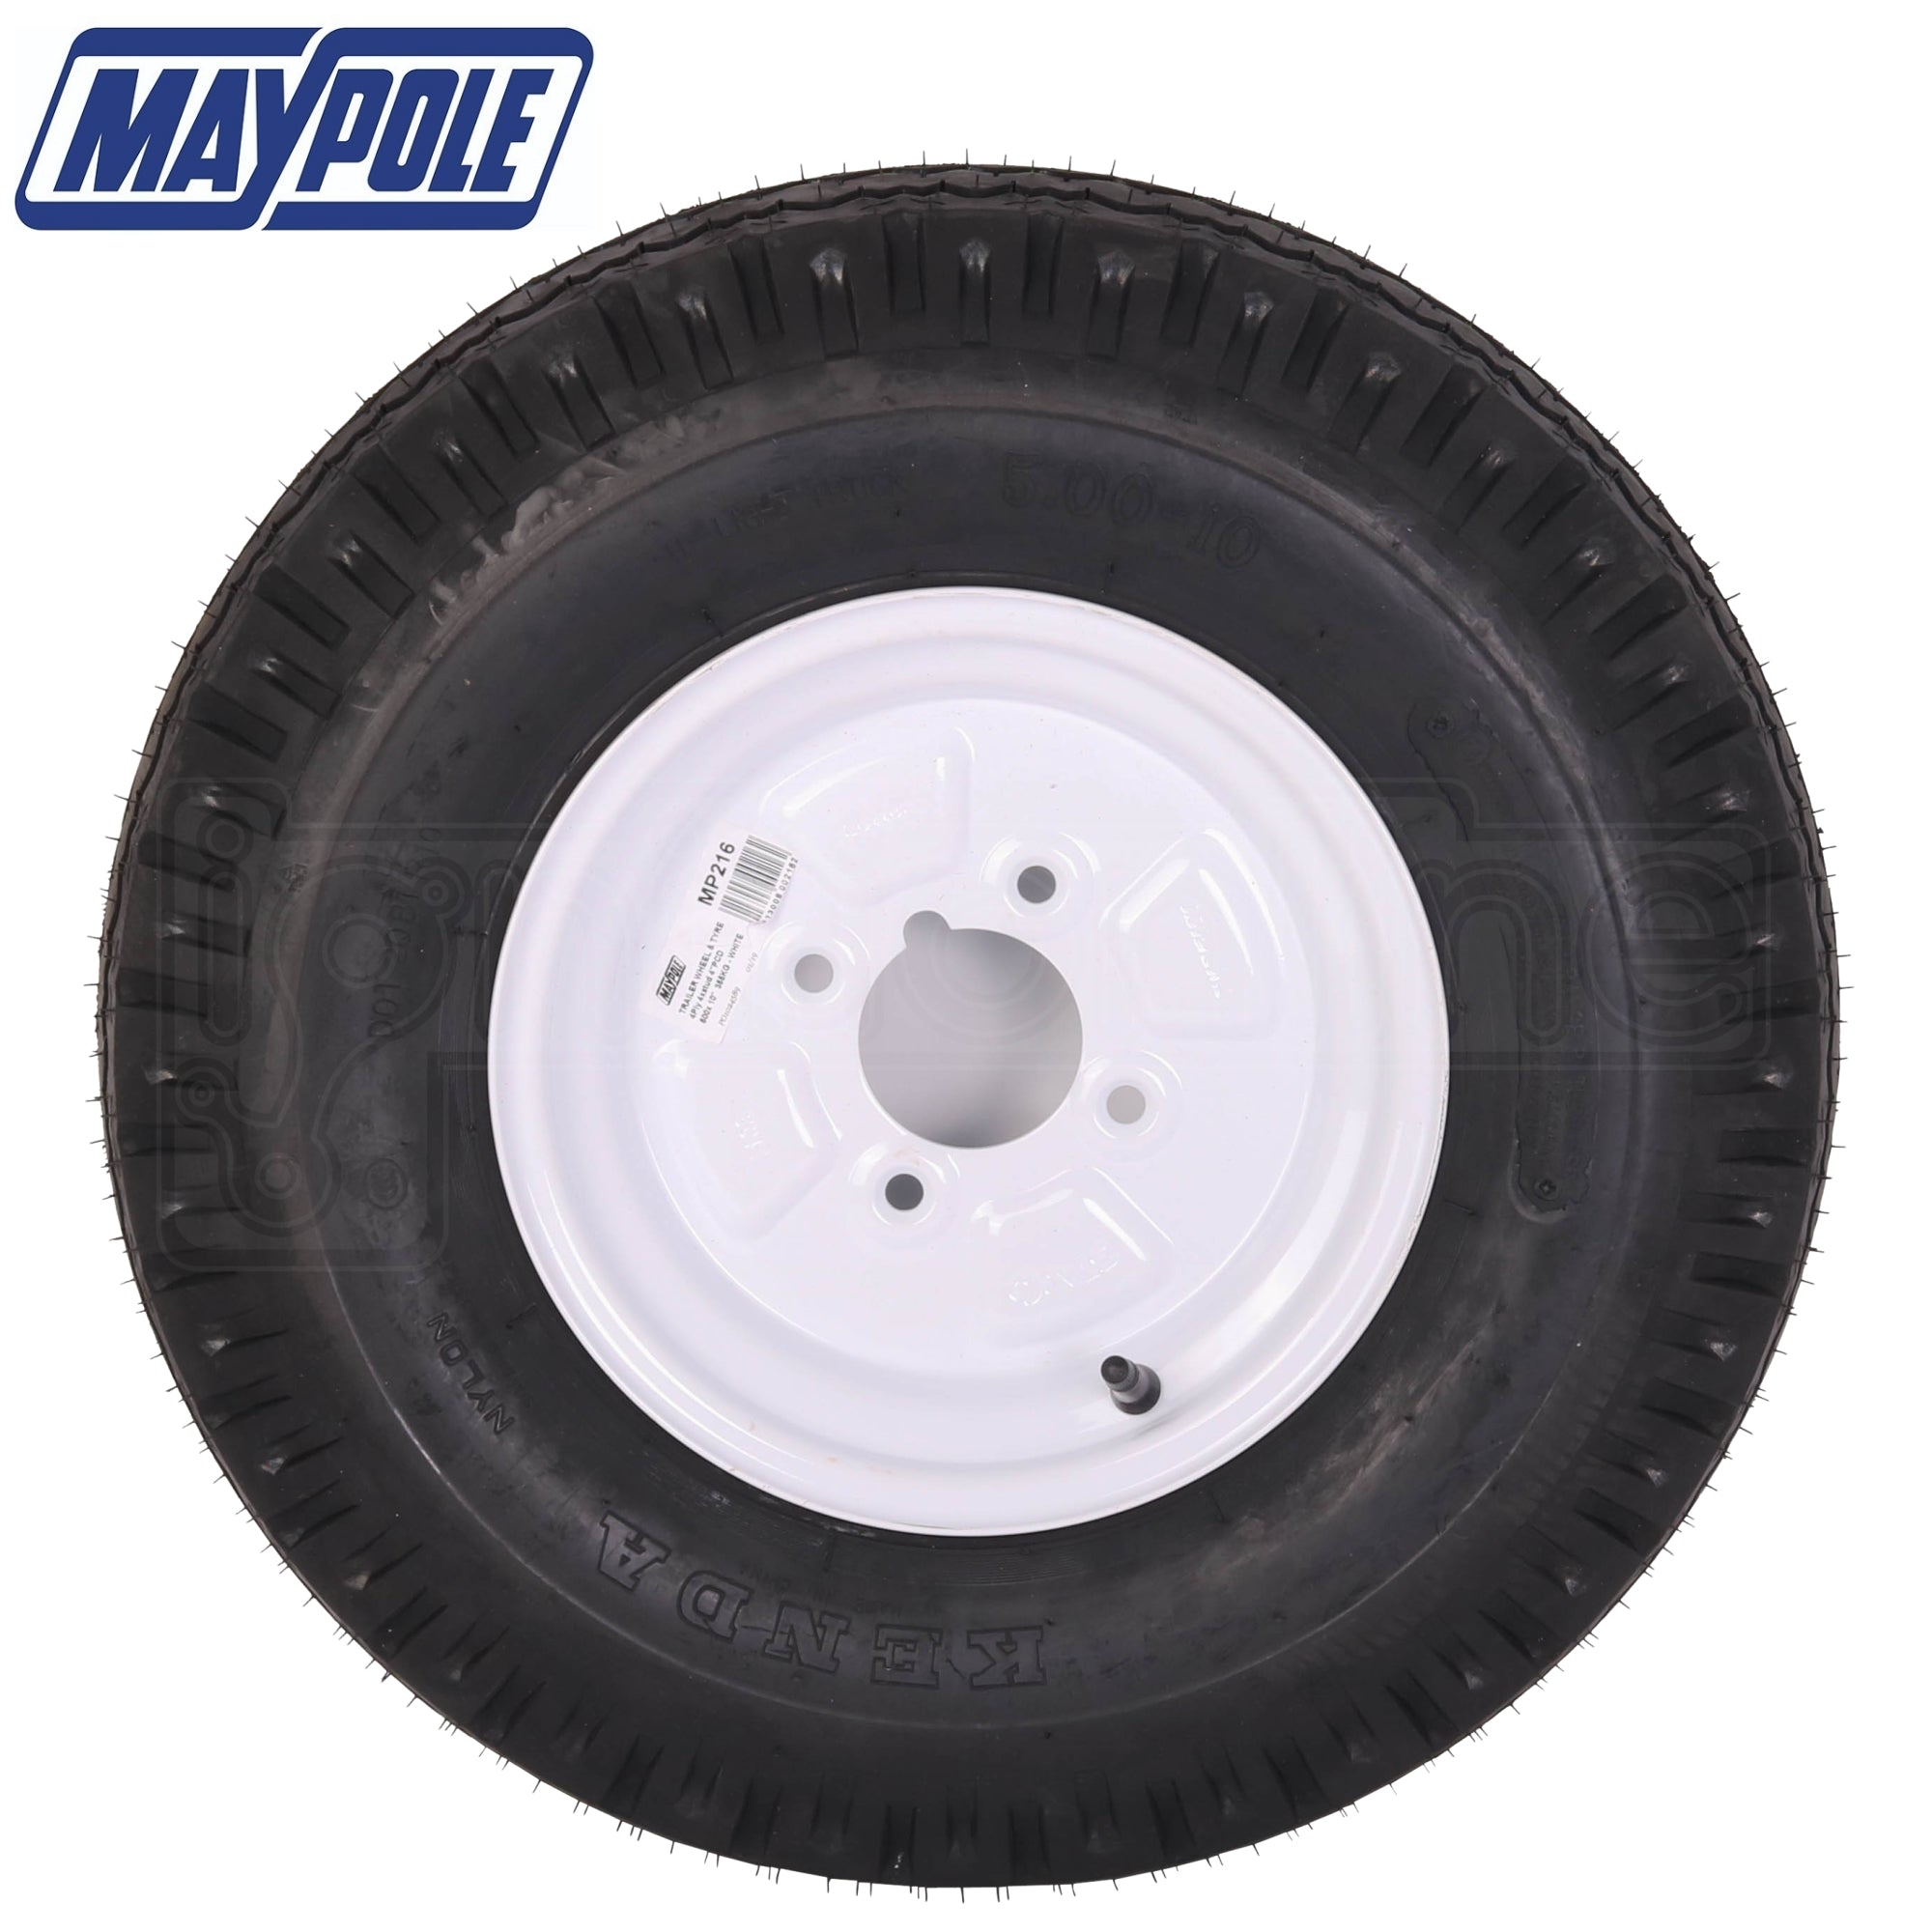 Maypole Wheel & Tyre 4ply 500x10"